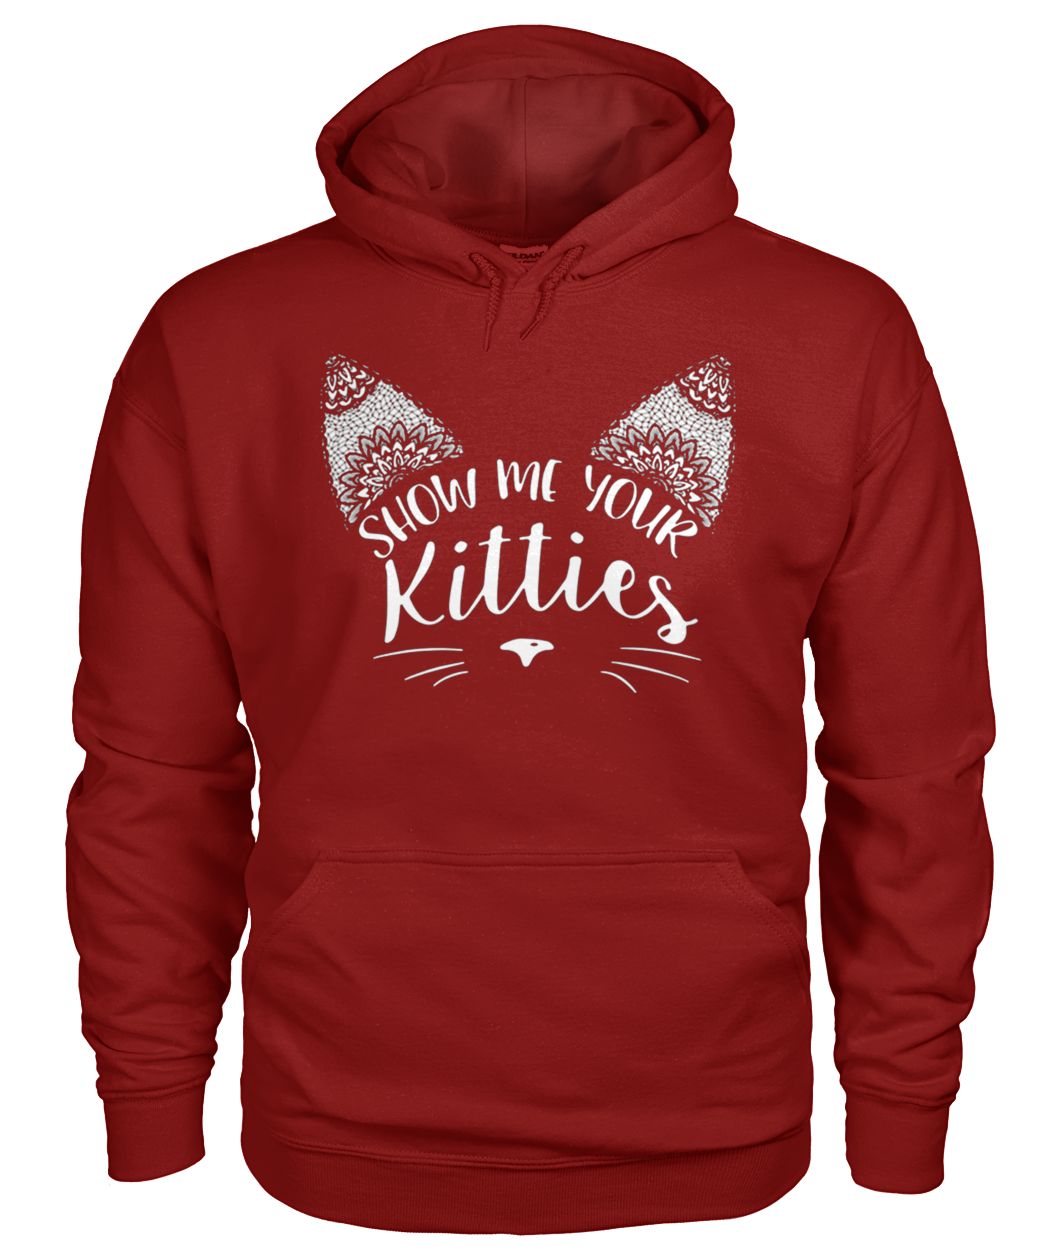 Show me your kitties gildan hoodie